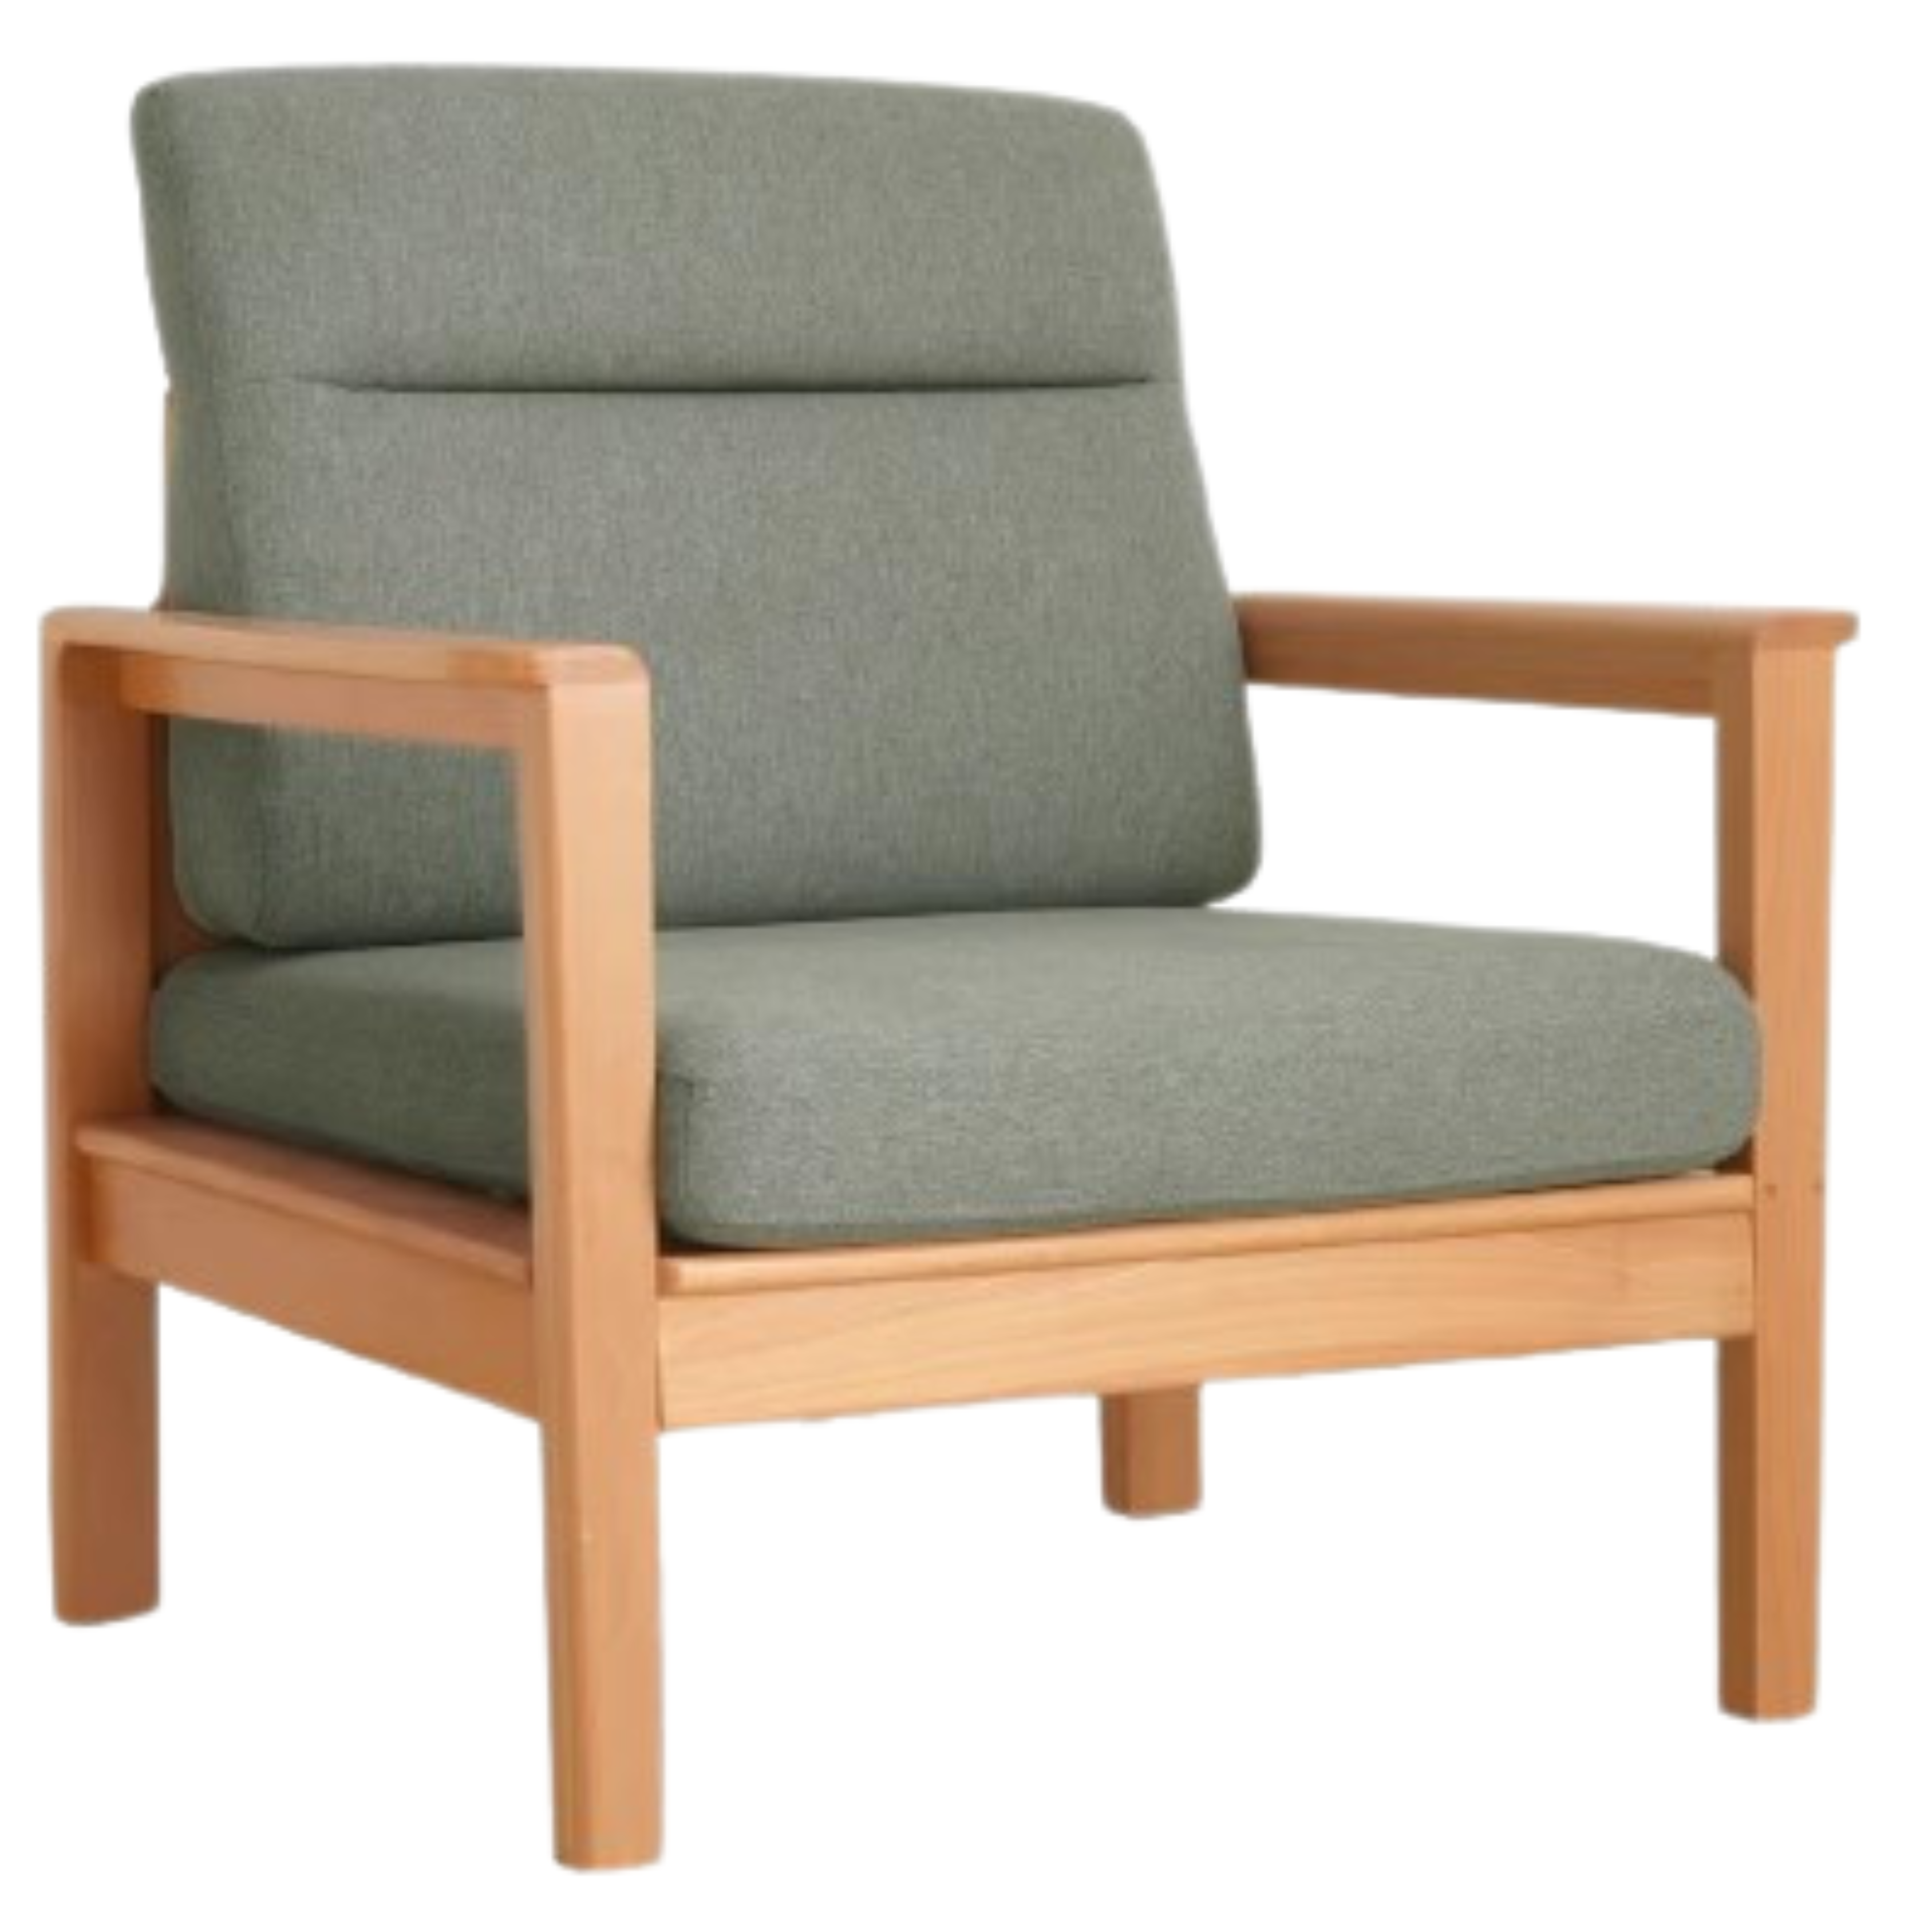 Beech solid wood armchair modern minimalist)